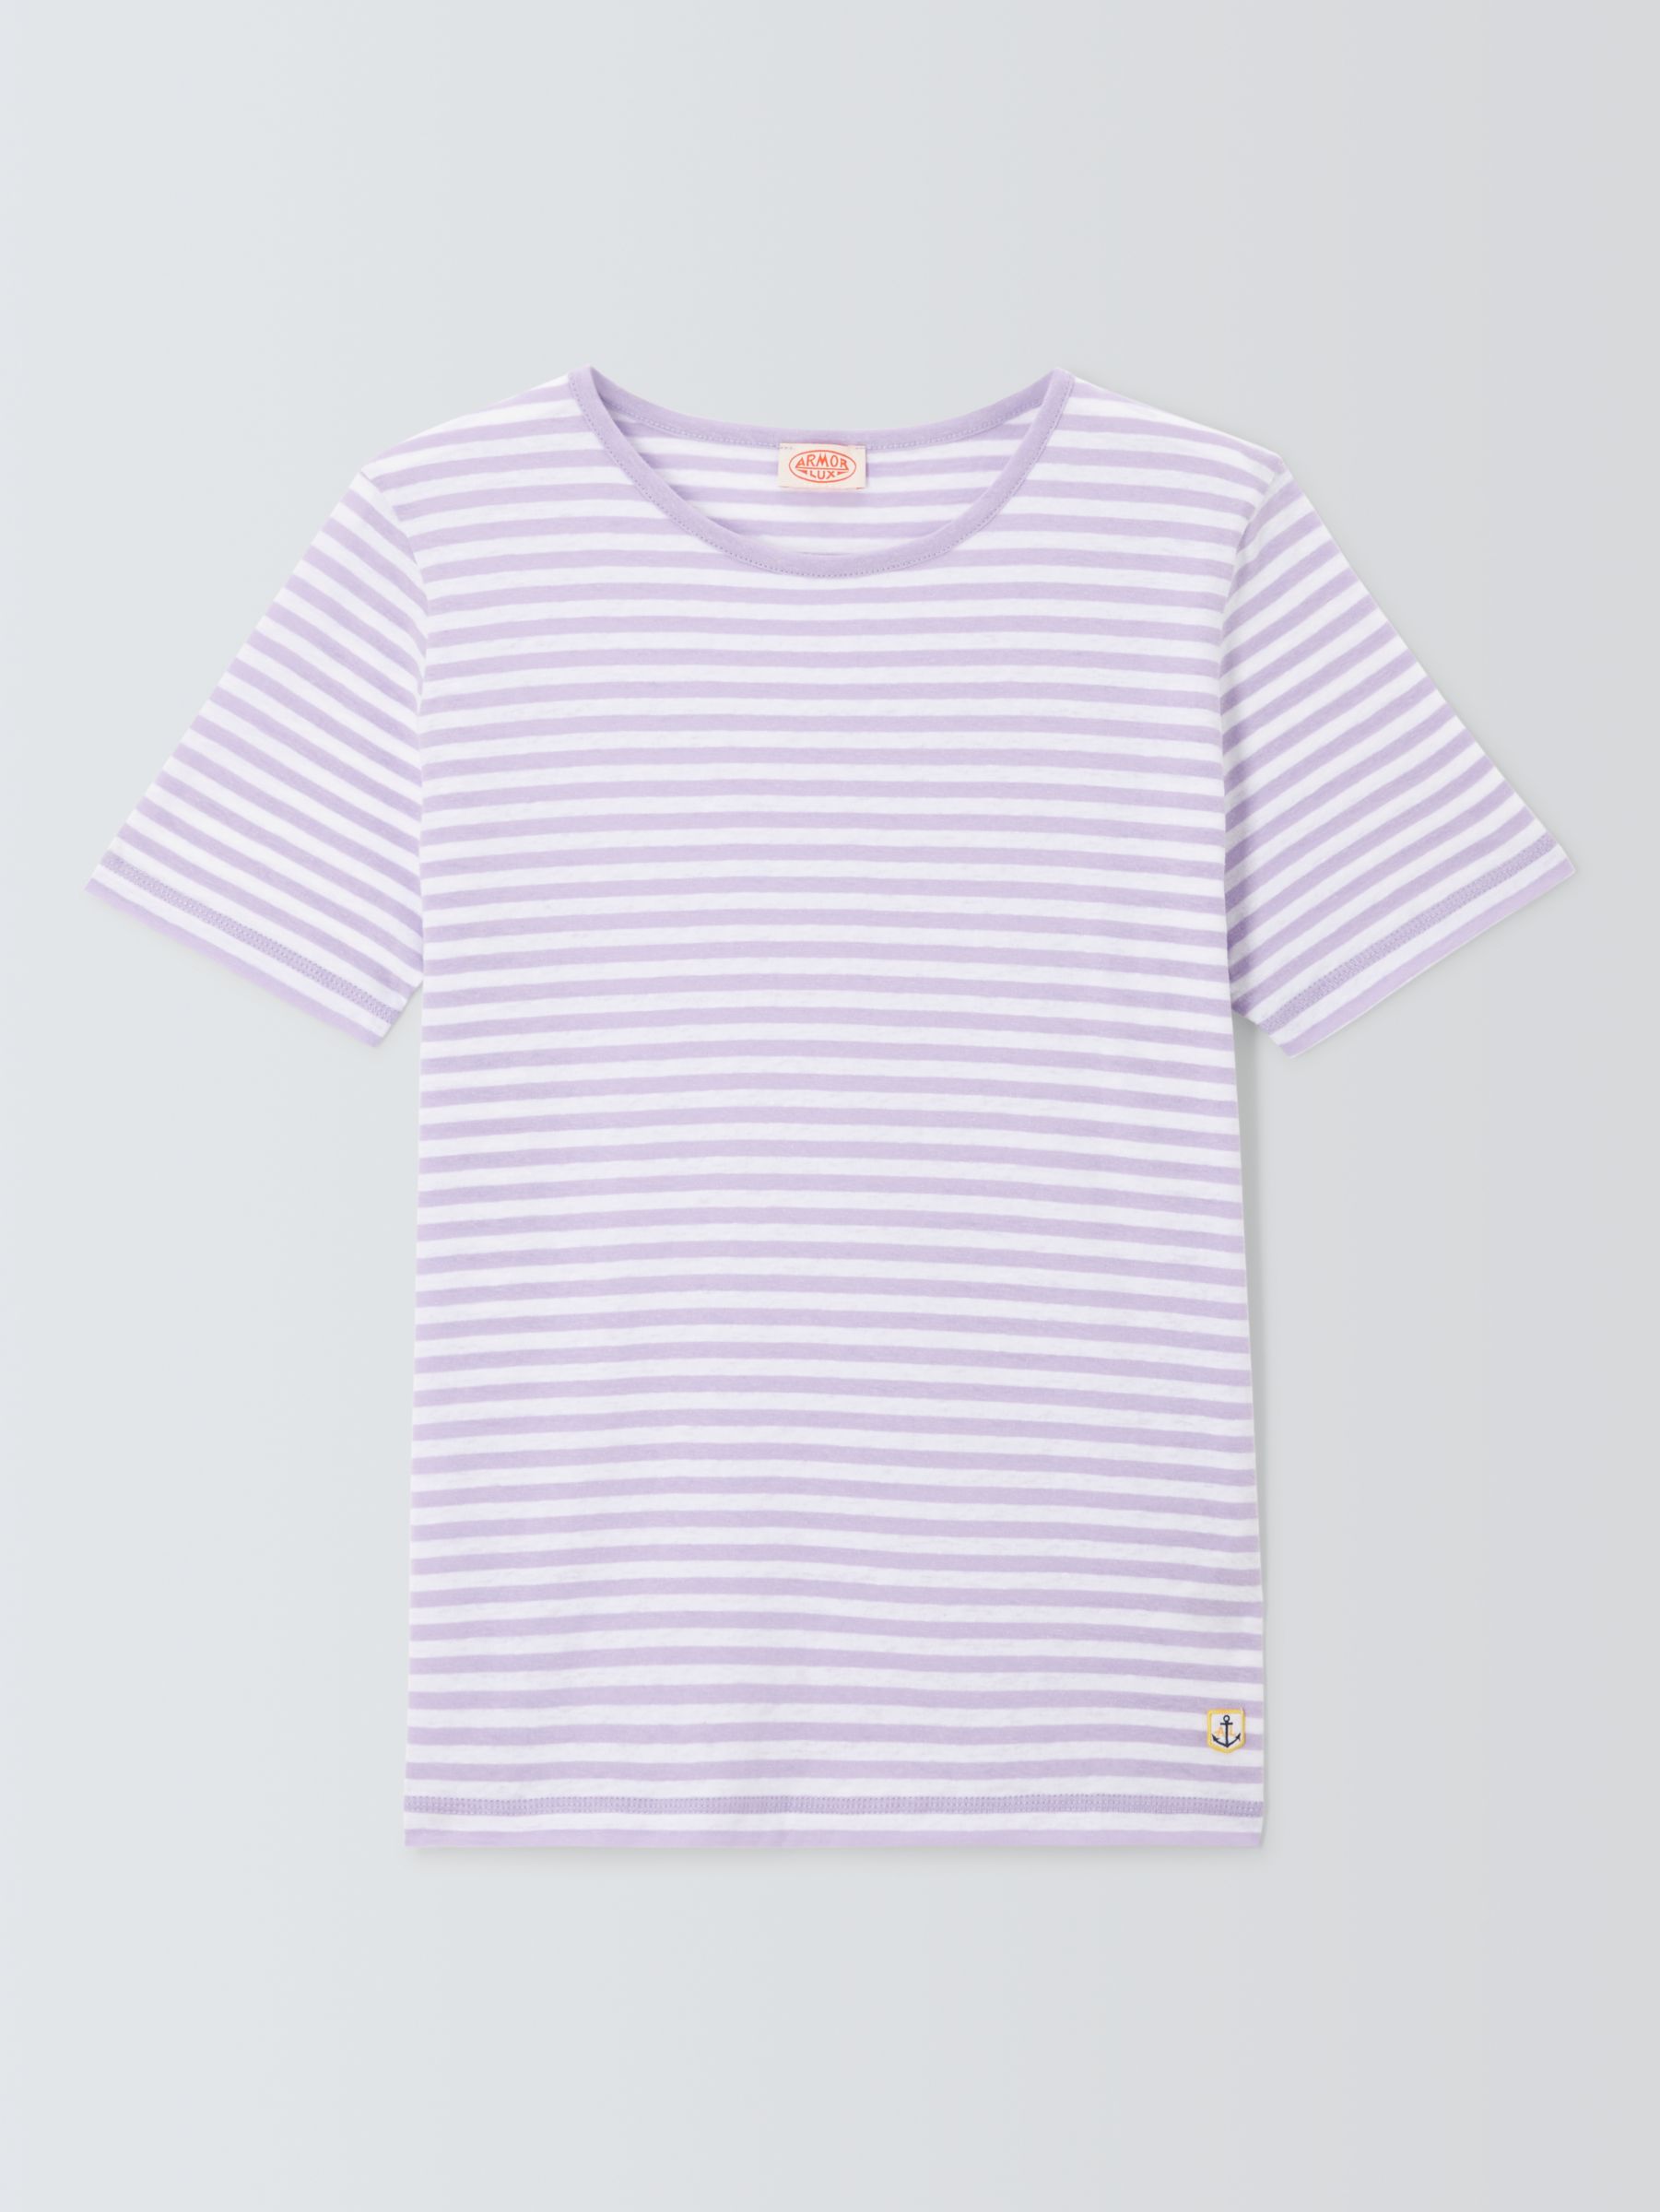 Armor Lux Striped Lightweight Striped Jersey T-Shirt, White/Pink, XL